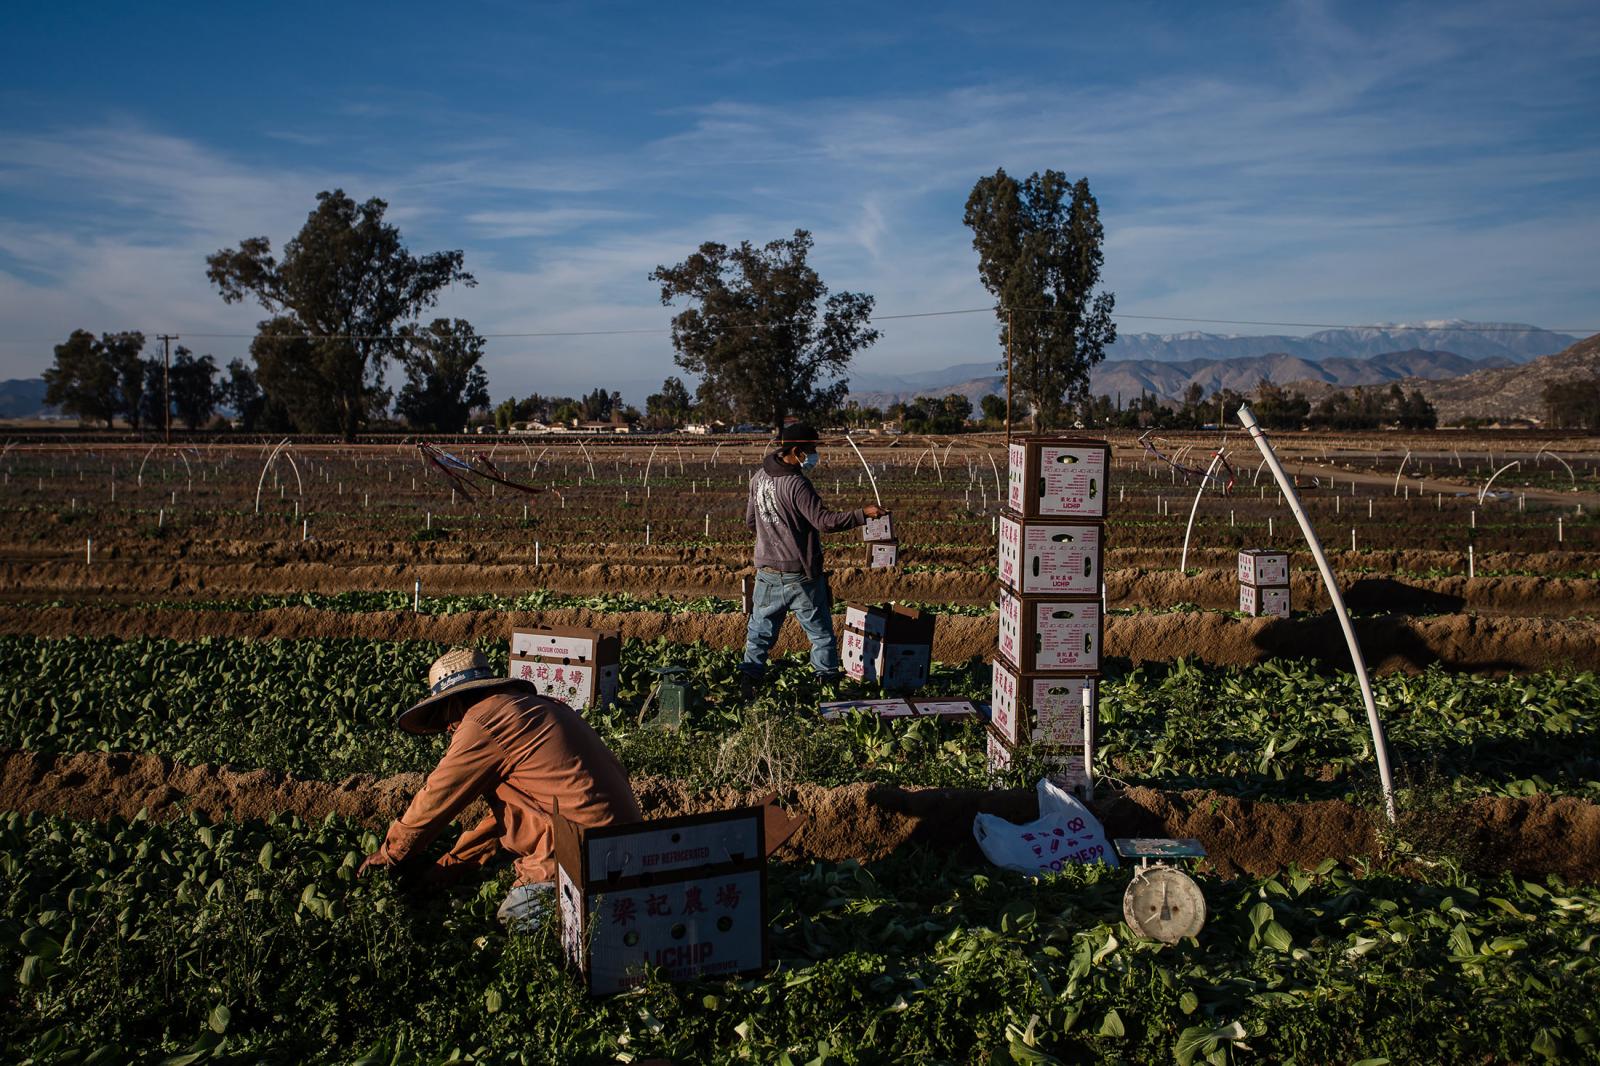 United States - Farmworkers in Hemet, Riverside County, California on...